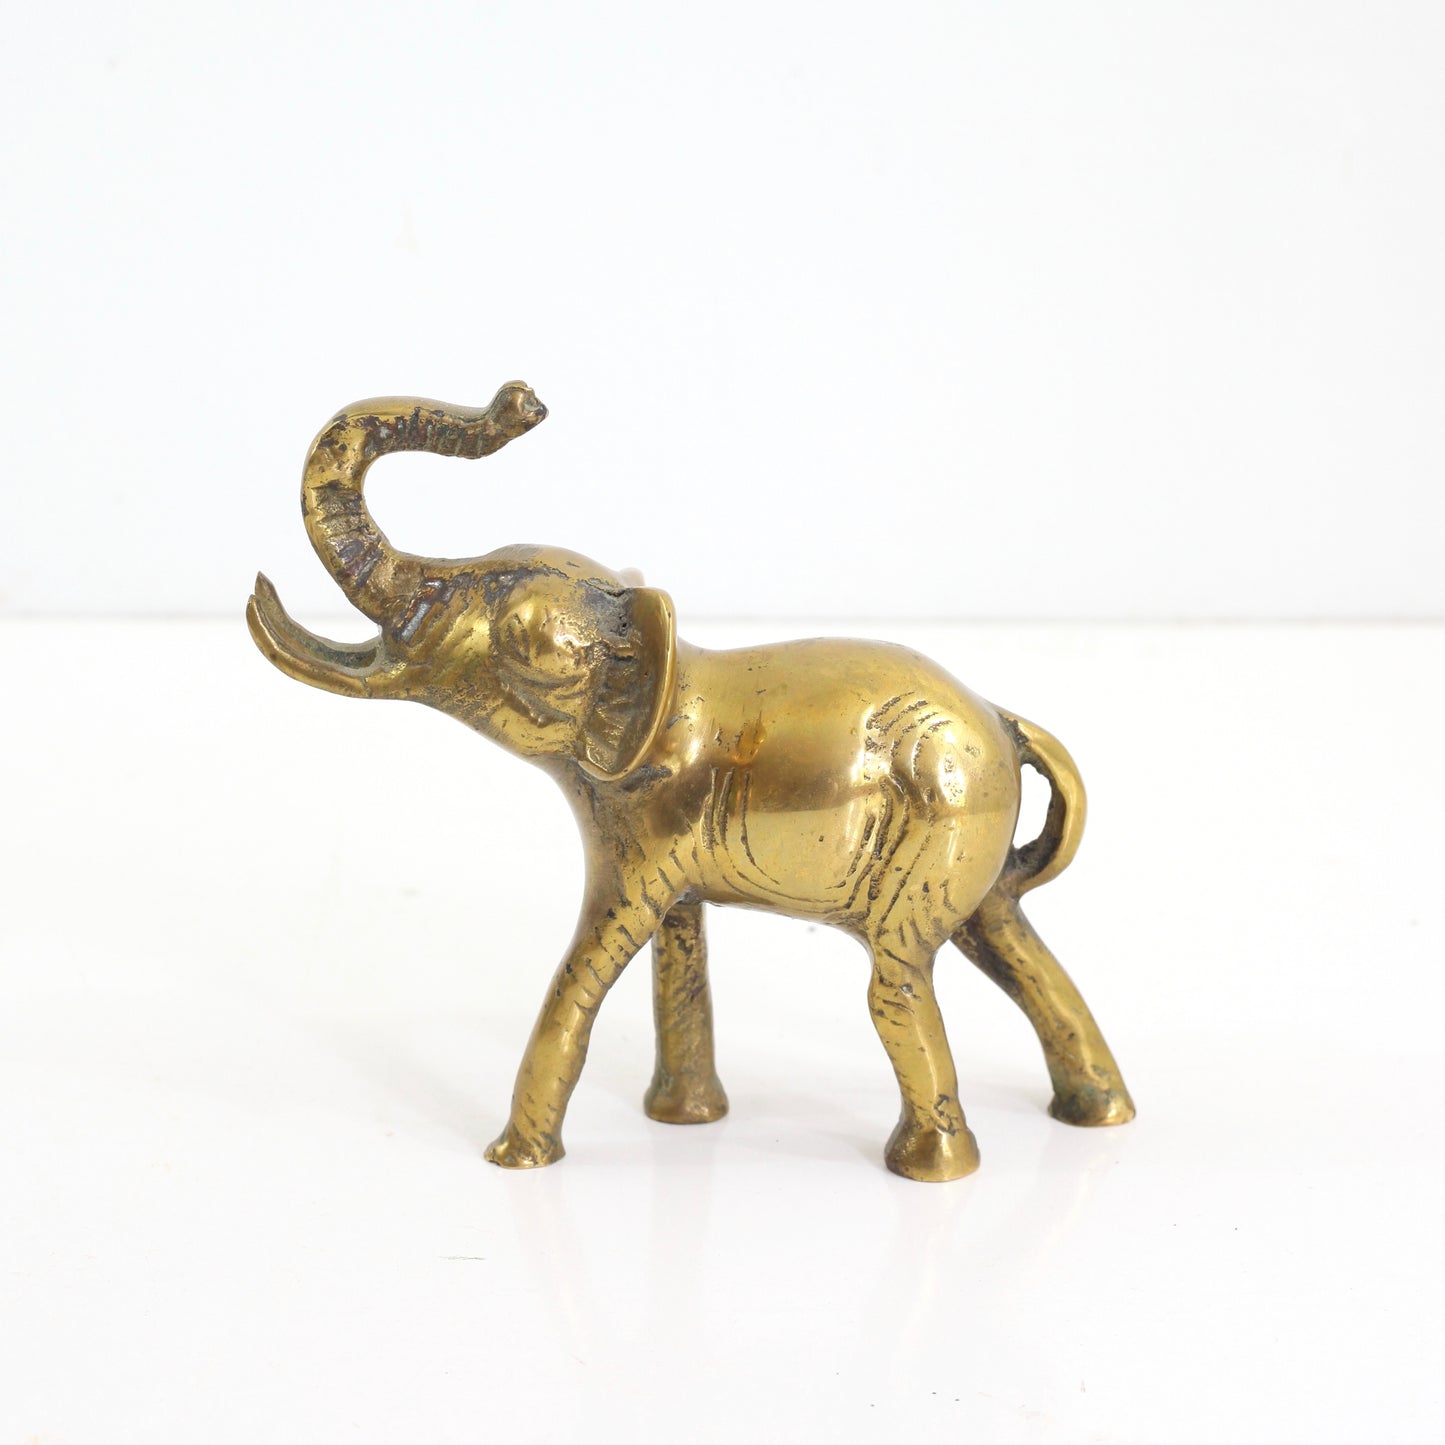 SOLD - Vintage Brass Elephant